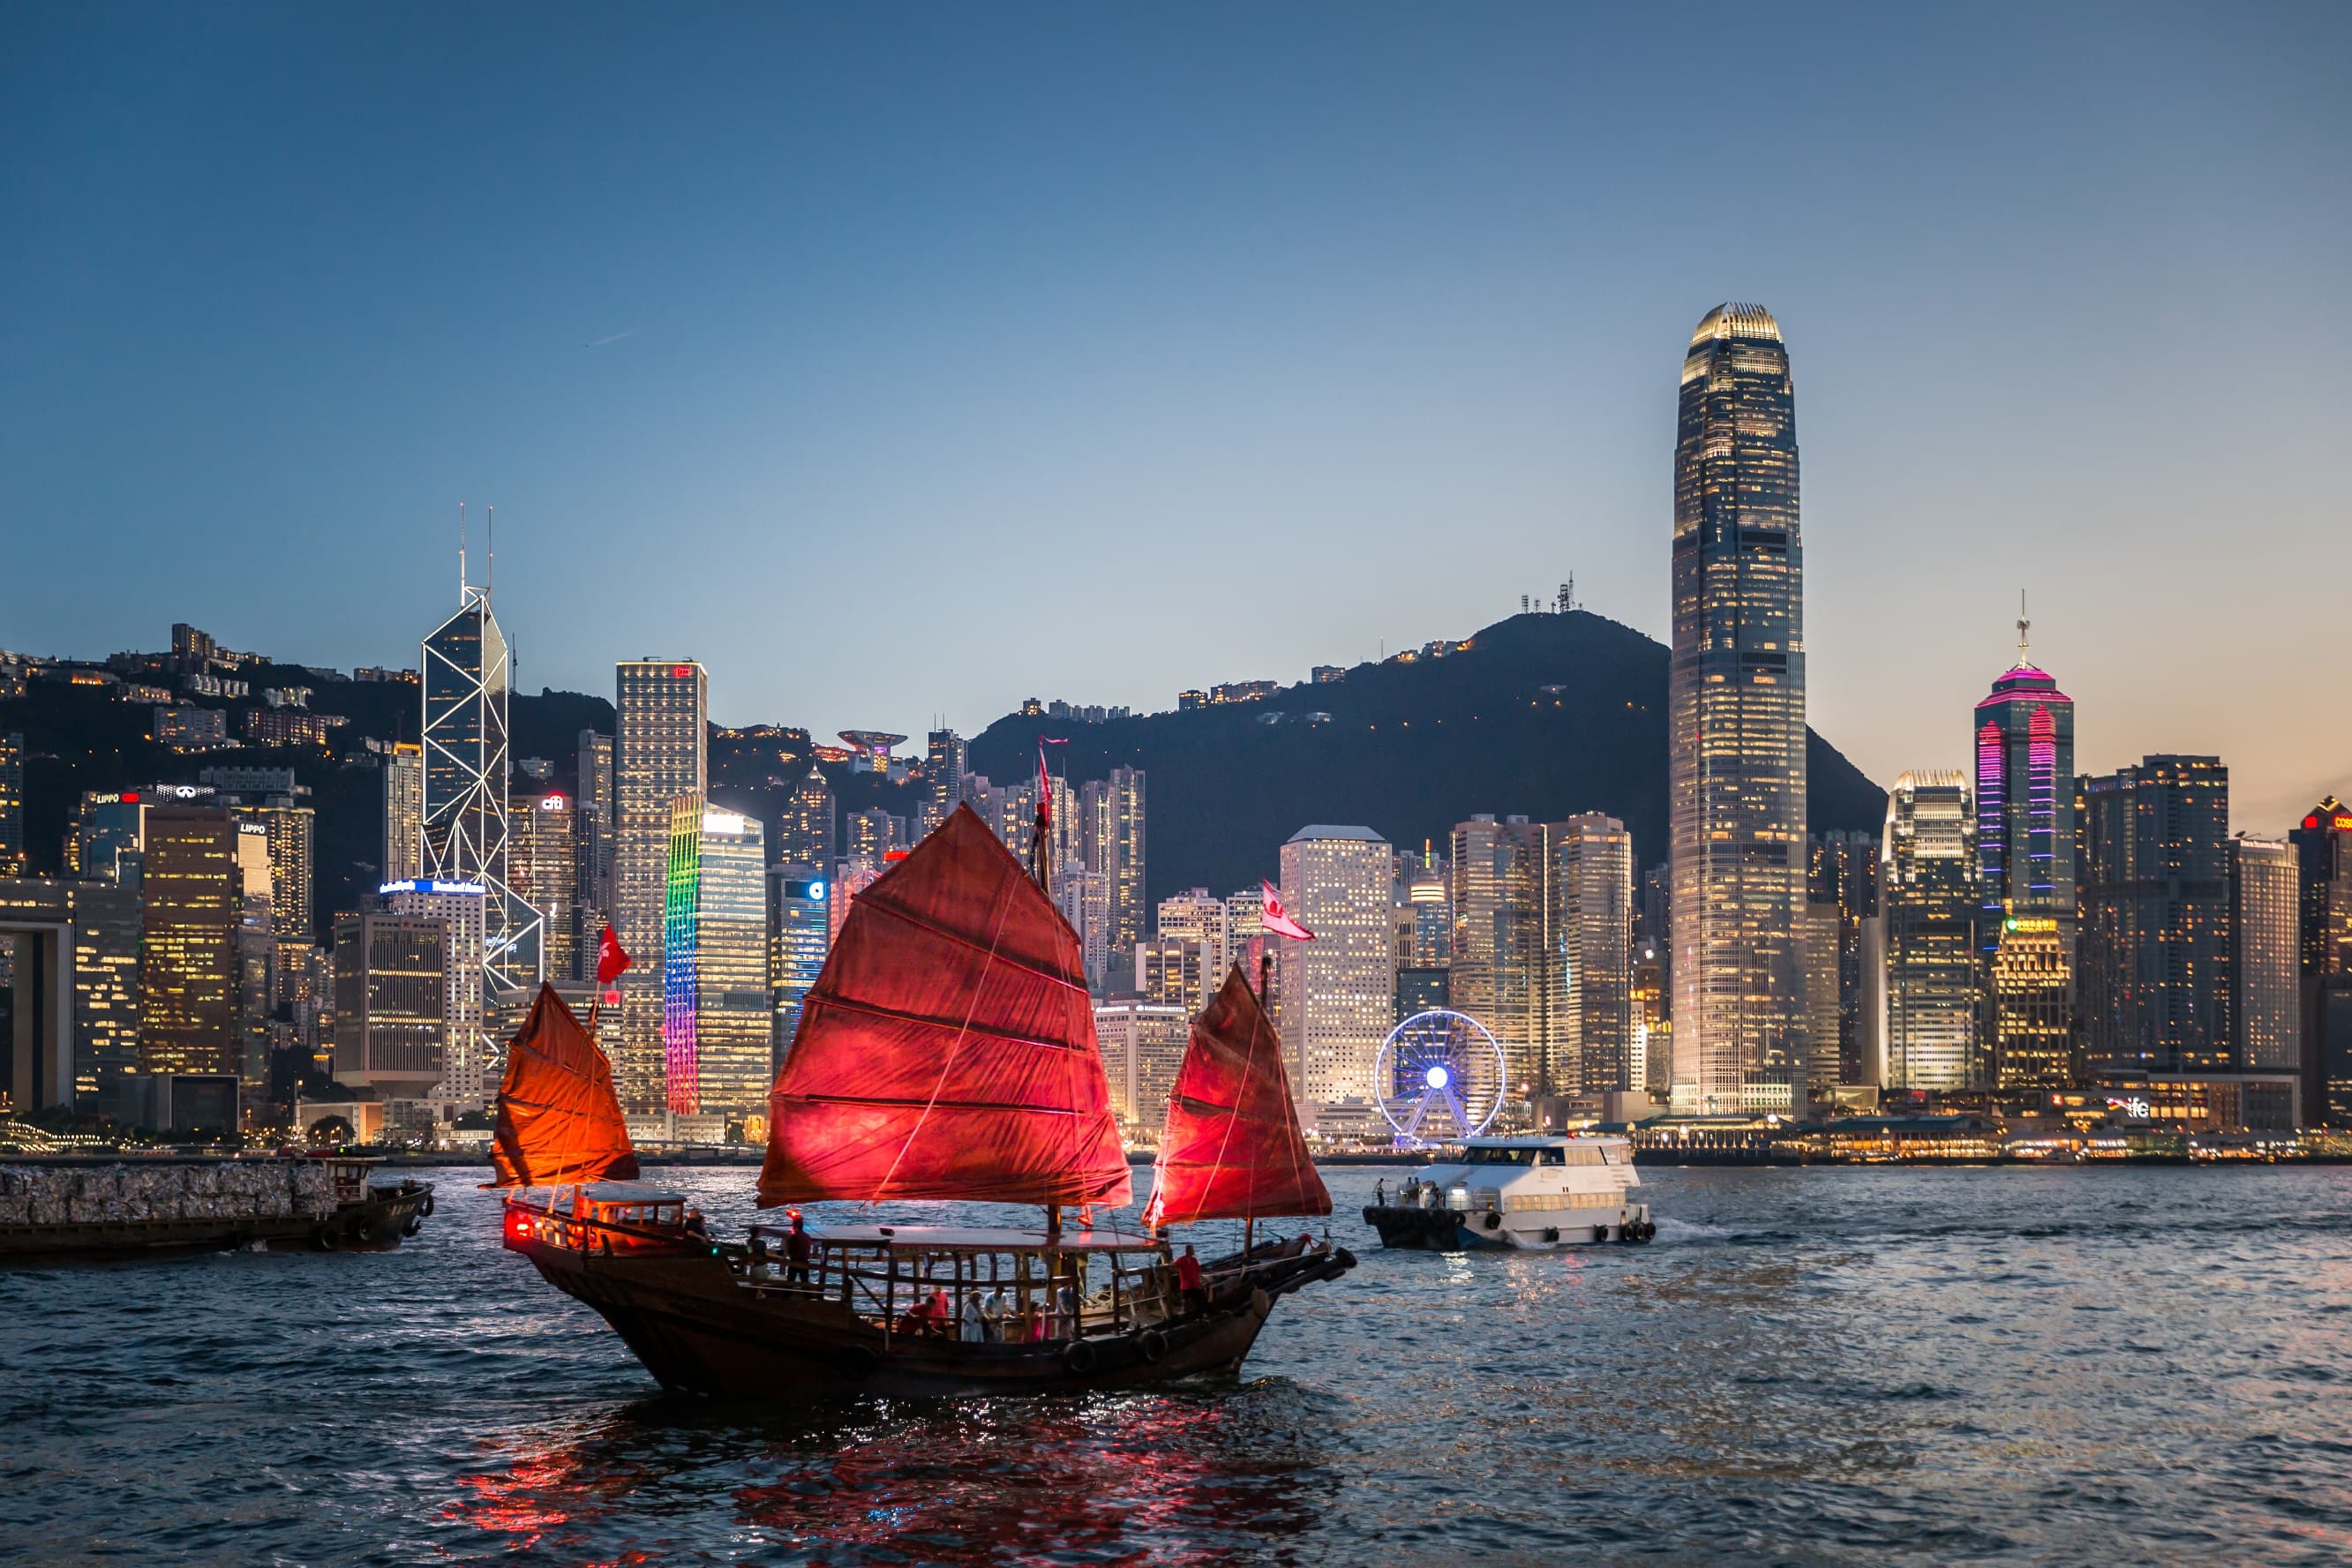 Shaping the skyline of Hong Kong